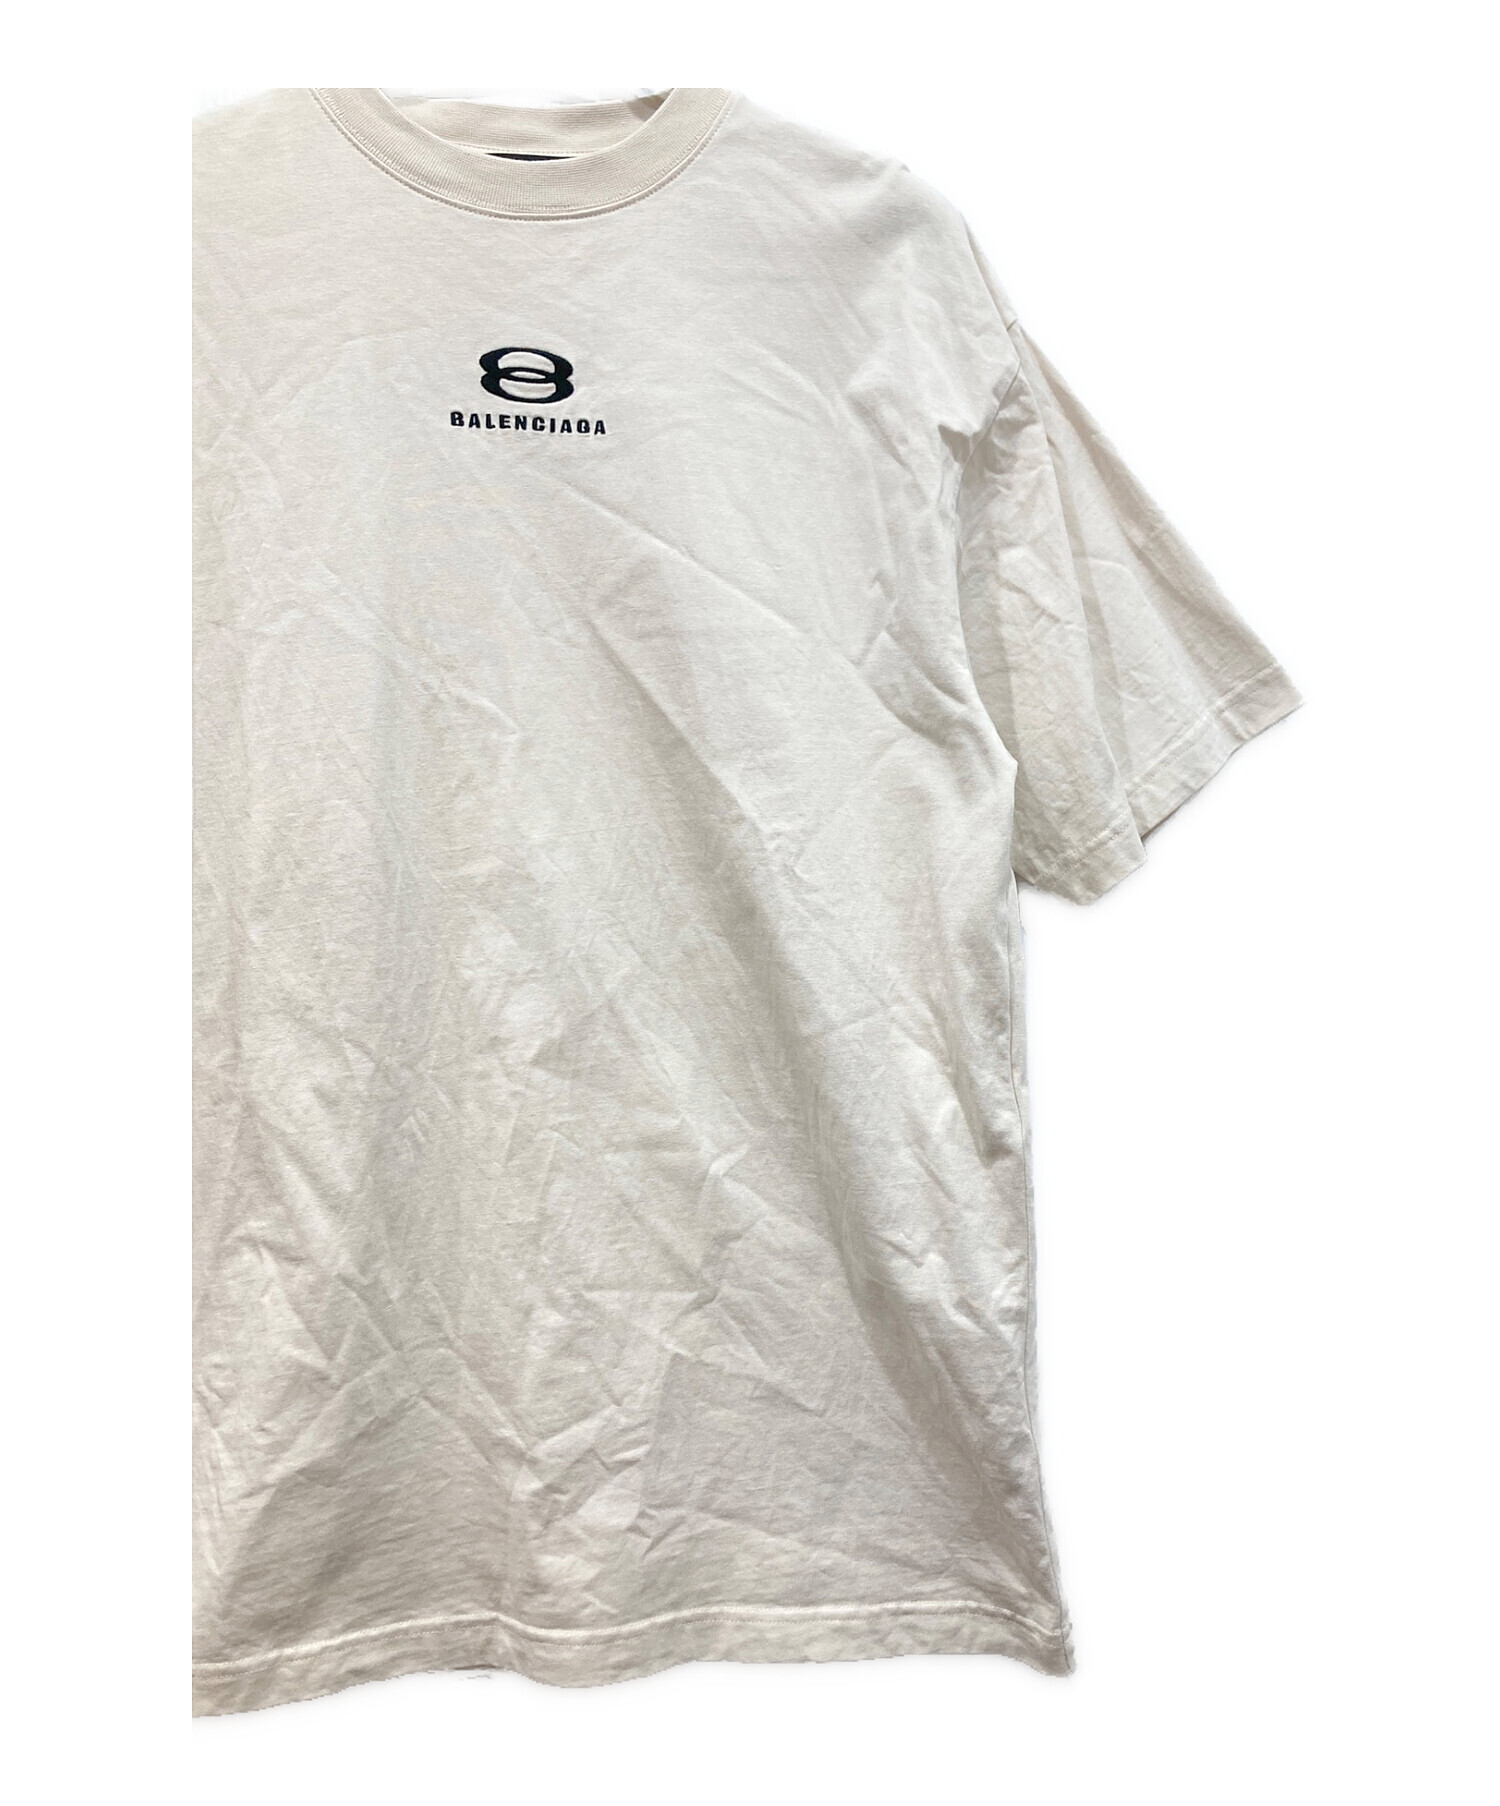 BALENCIAGA バレンシアガ 22SS Unity 3/4 Sleeves Tee ユニティ7分袖Tシャツ オーバーサイズ ロゴ刺繍 ダメージ加工カットソー ブラック 699190 TMVC8